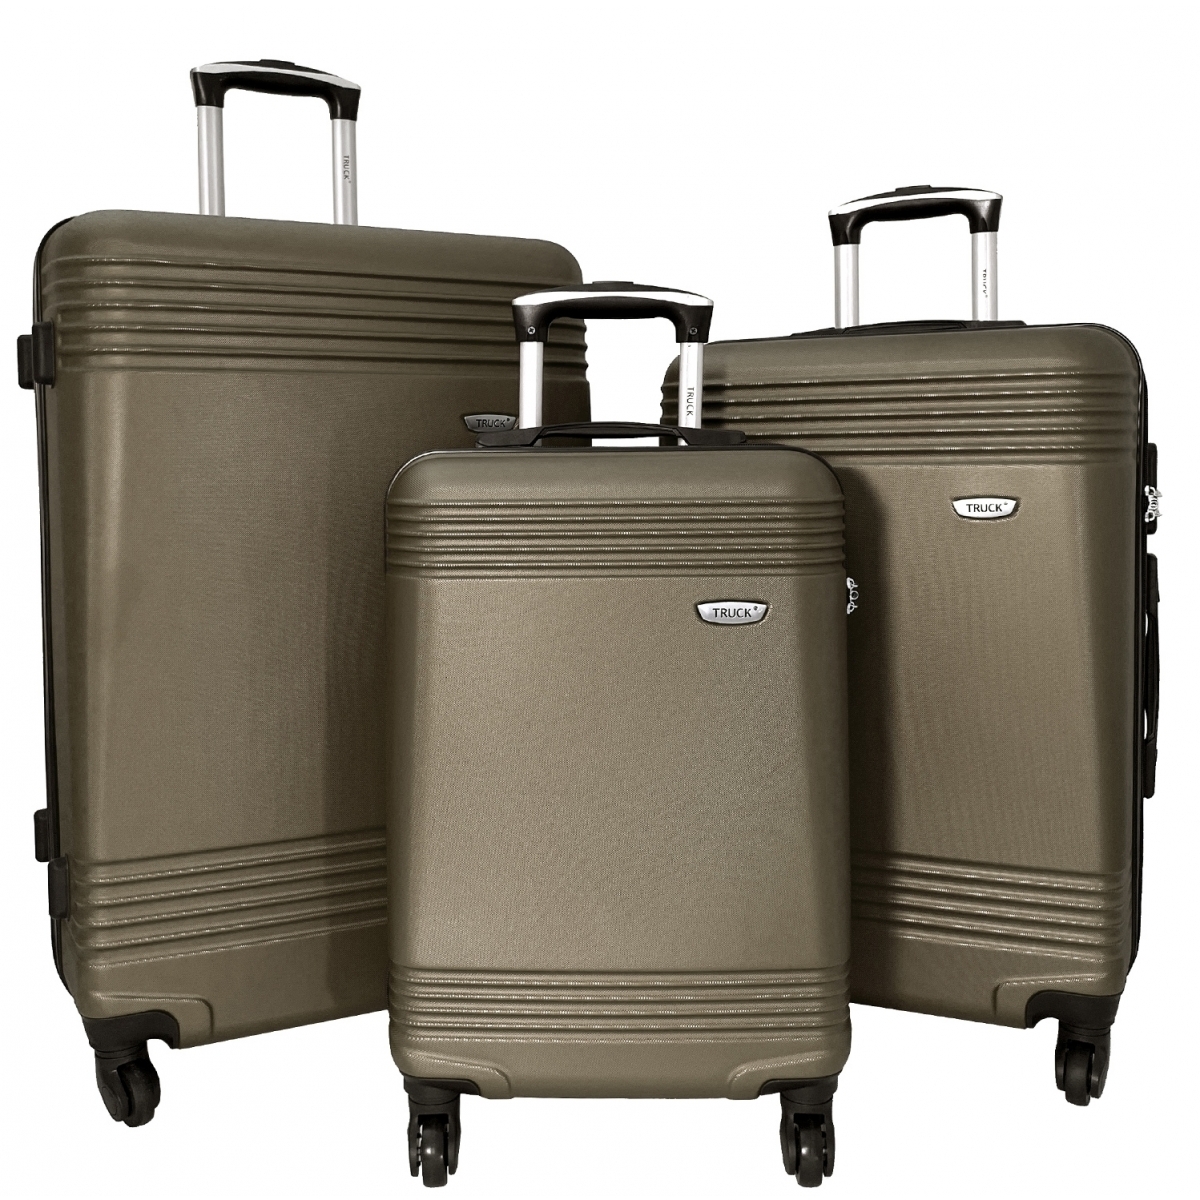 Grande valise XL rigide Delsey Montcenis TSA polypropylène 82cm